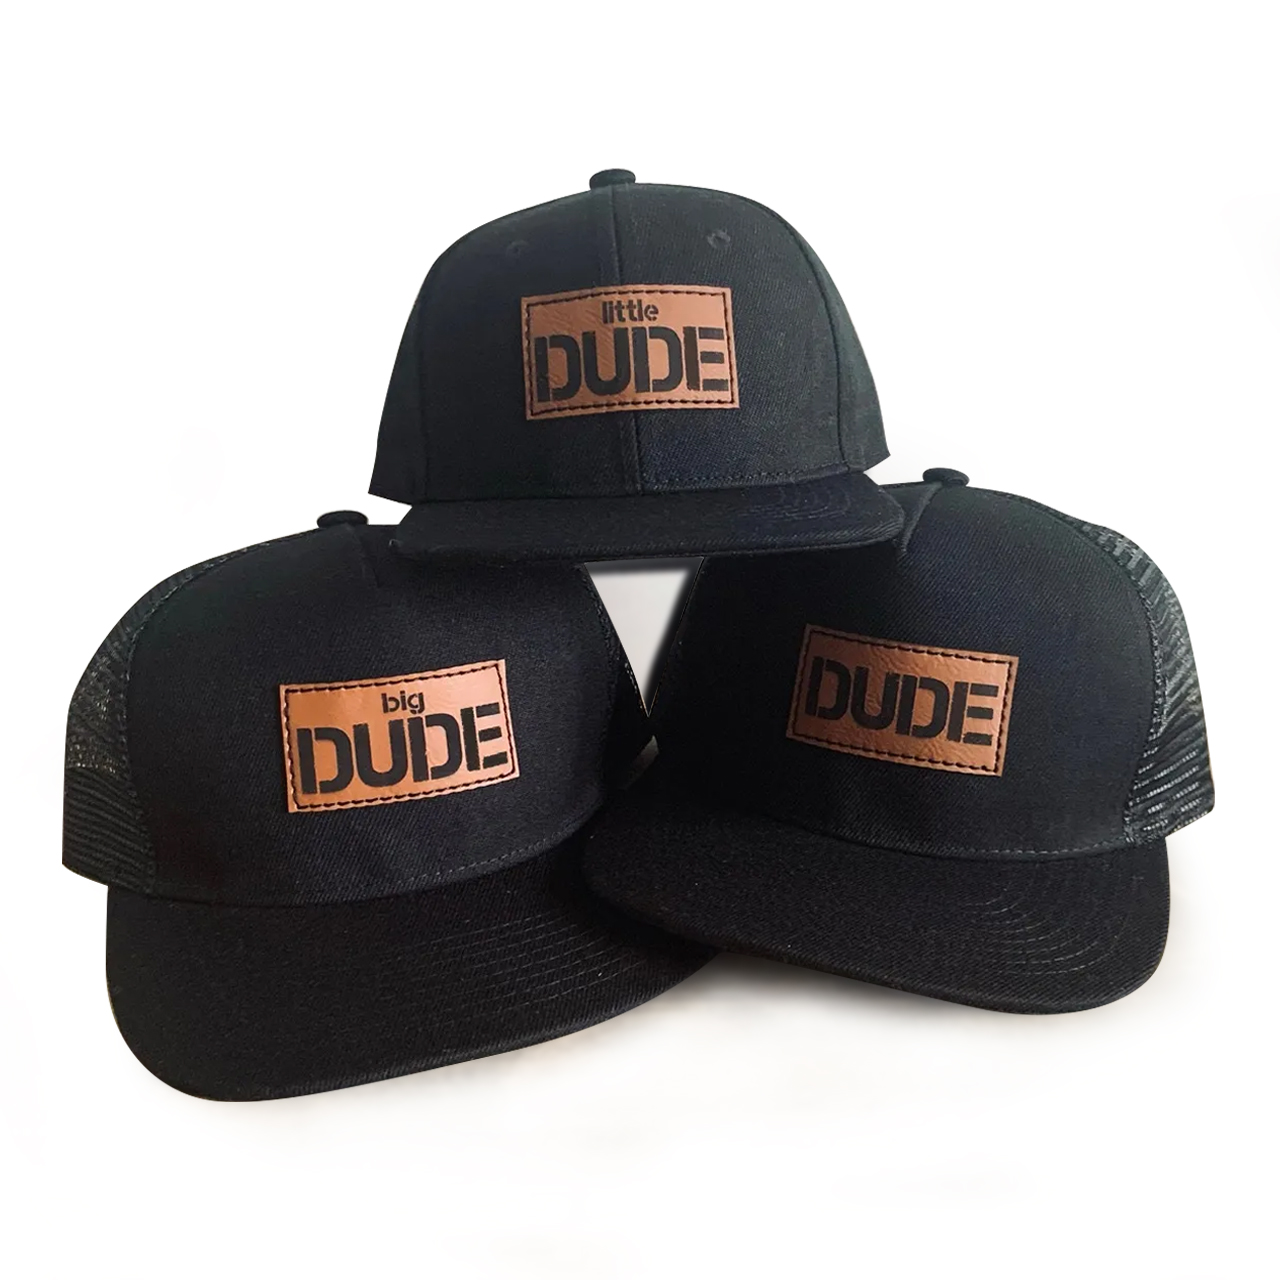 Dude + Little Dude SnapBack Set